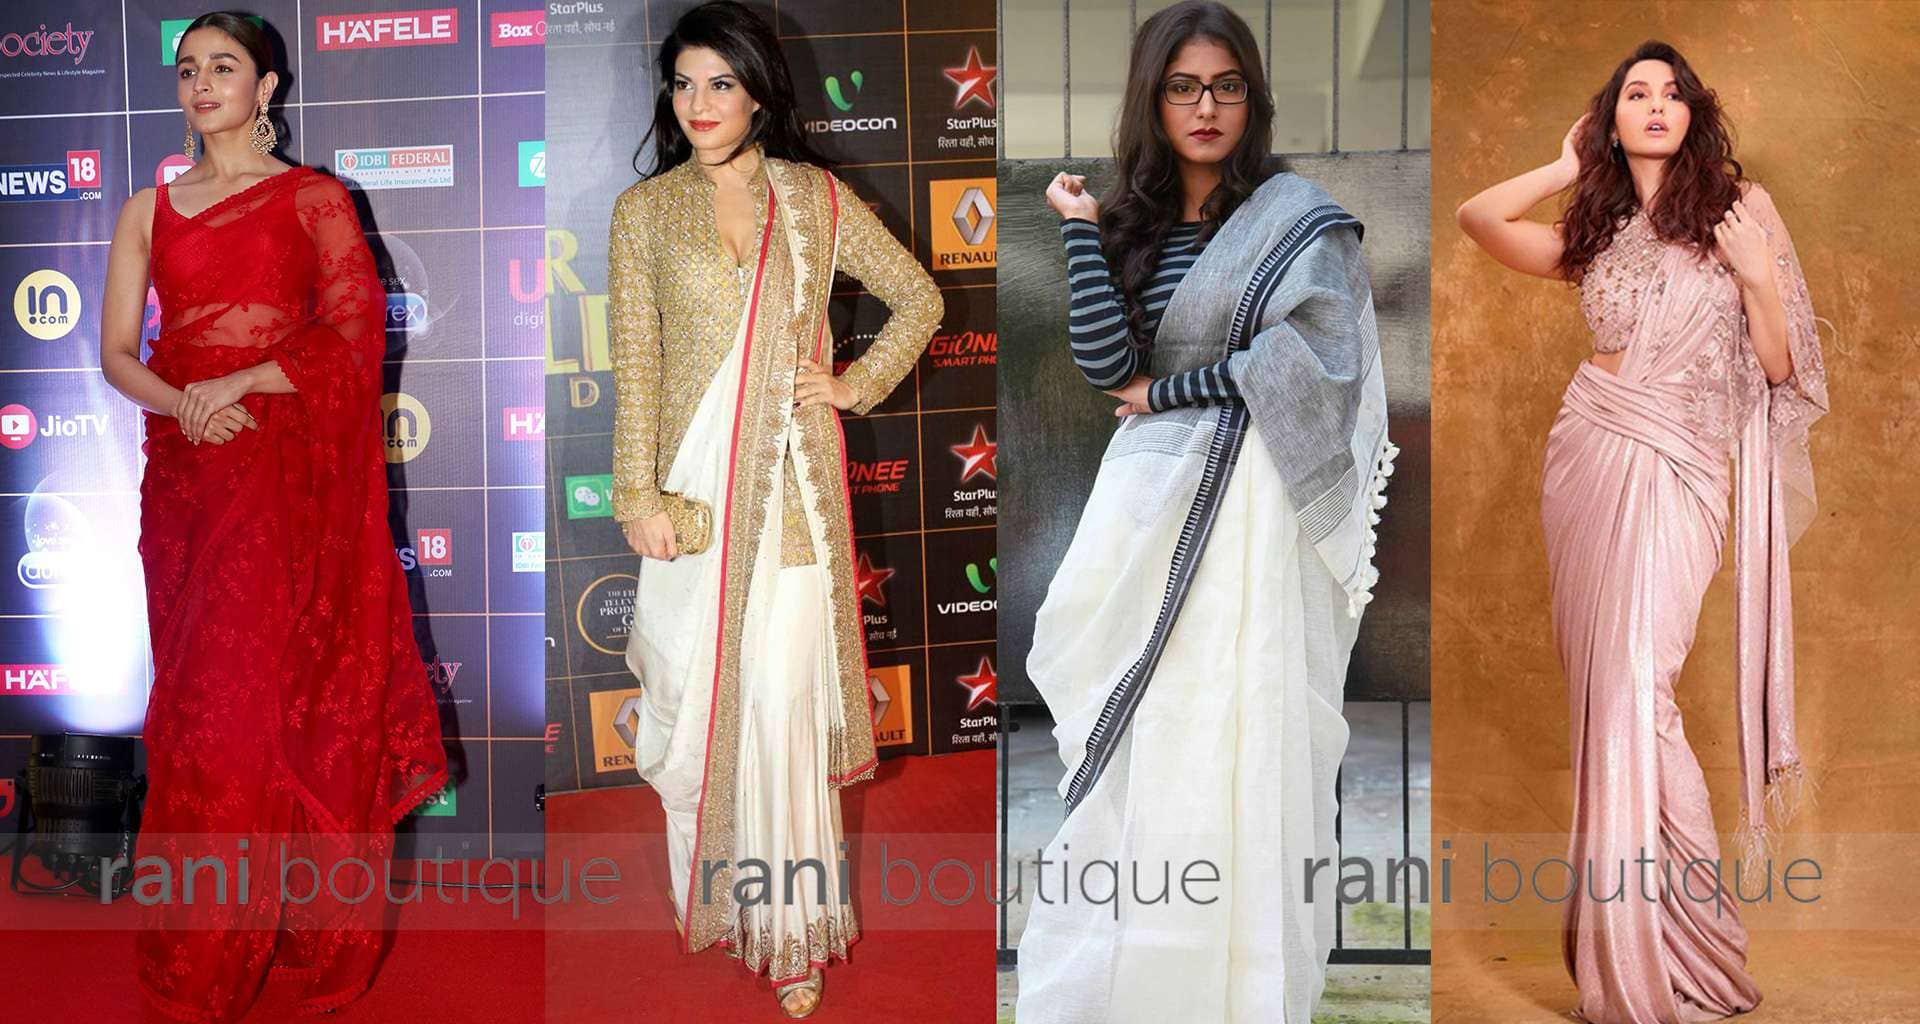 Saree draping style in 5 amazing way per region of India - Rani